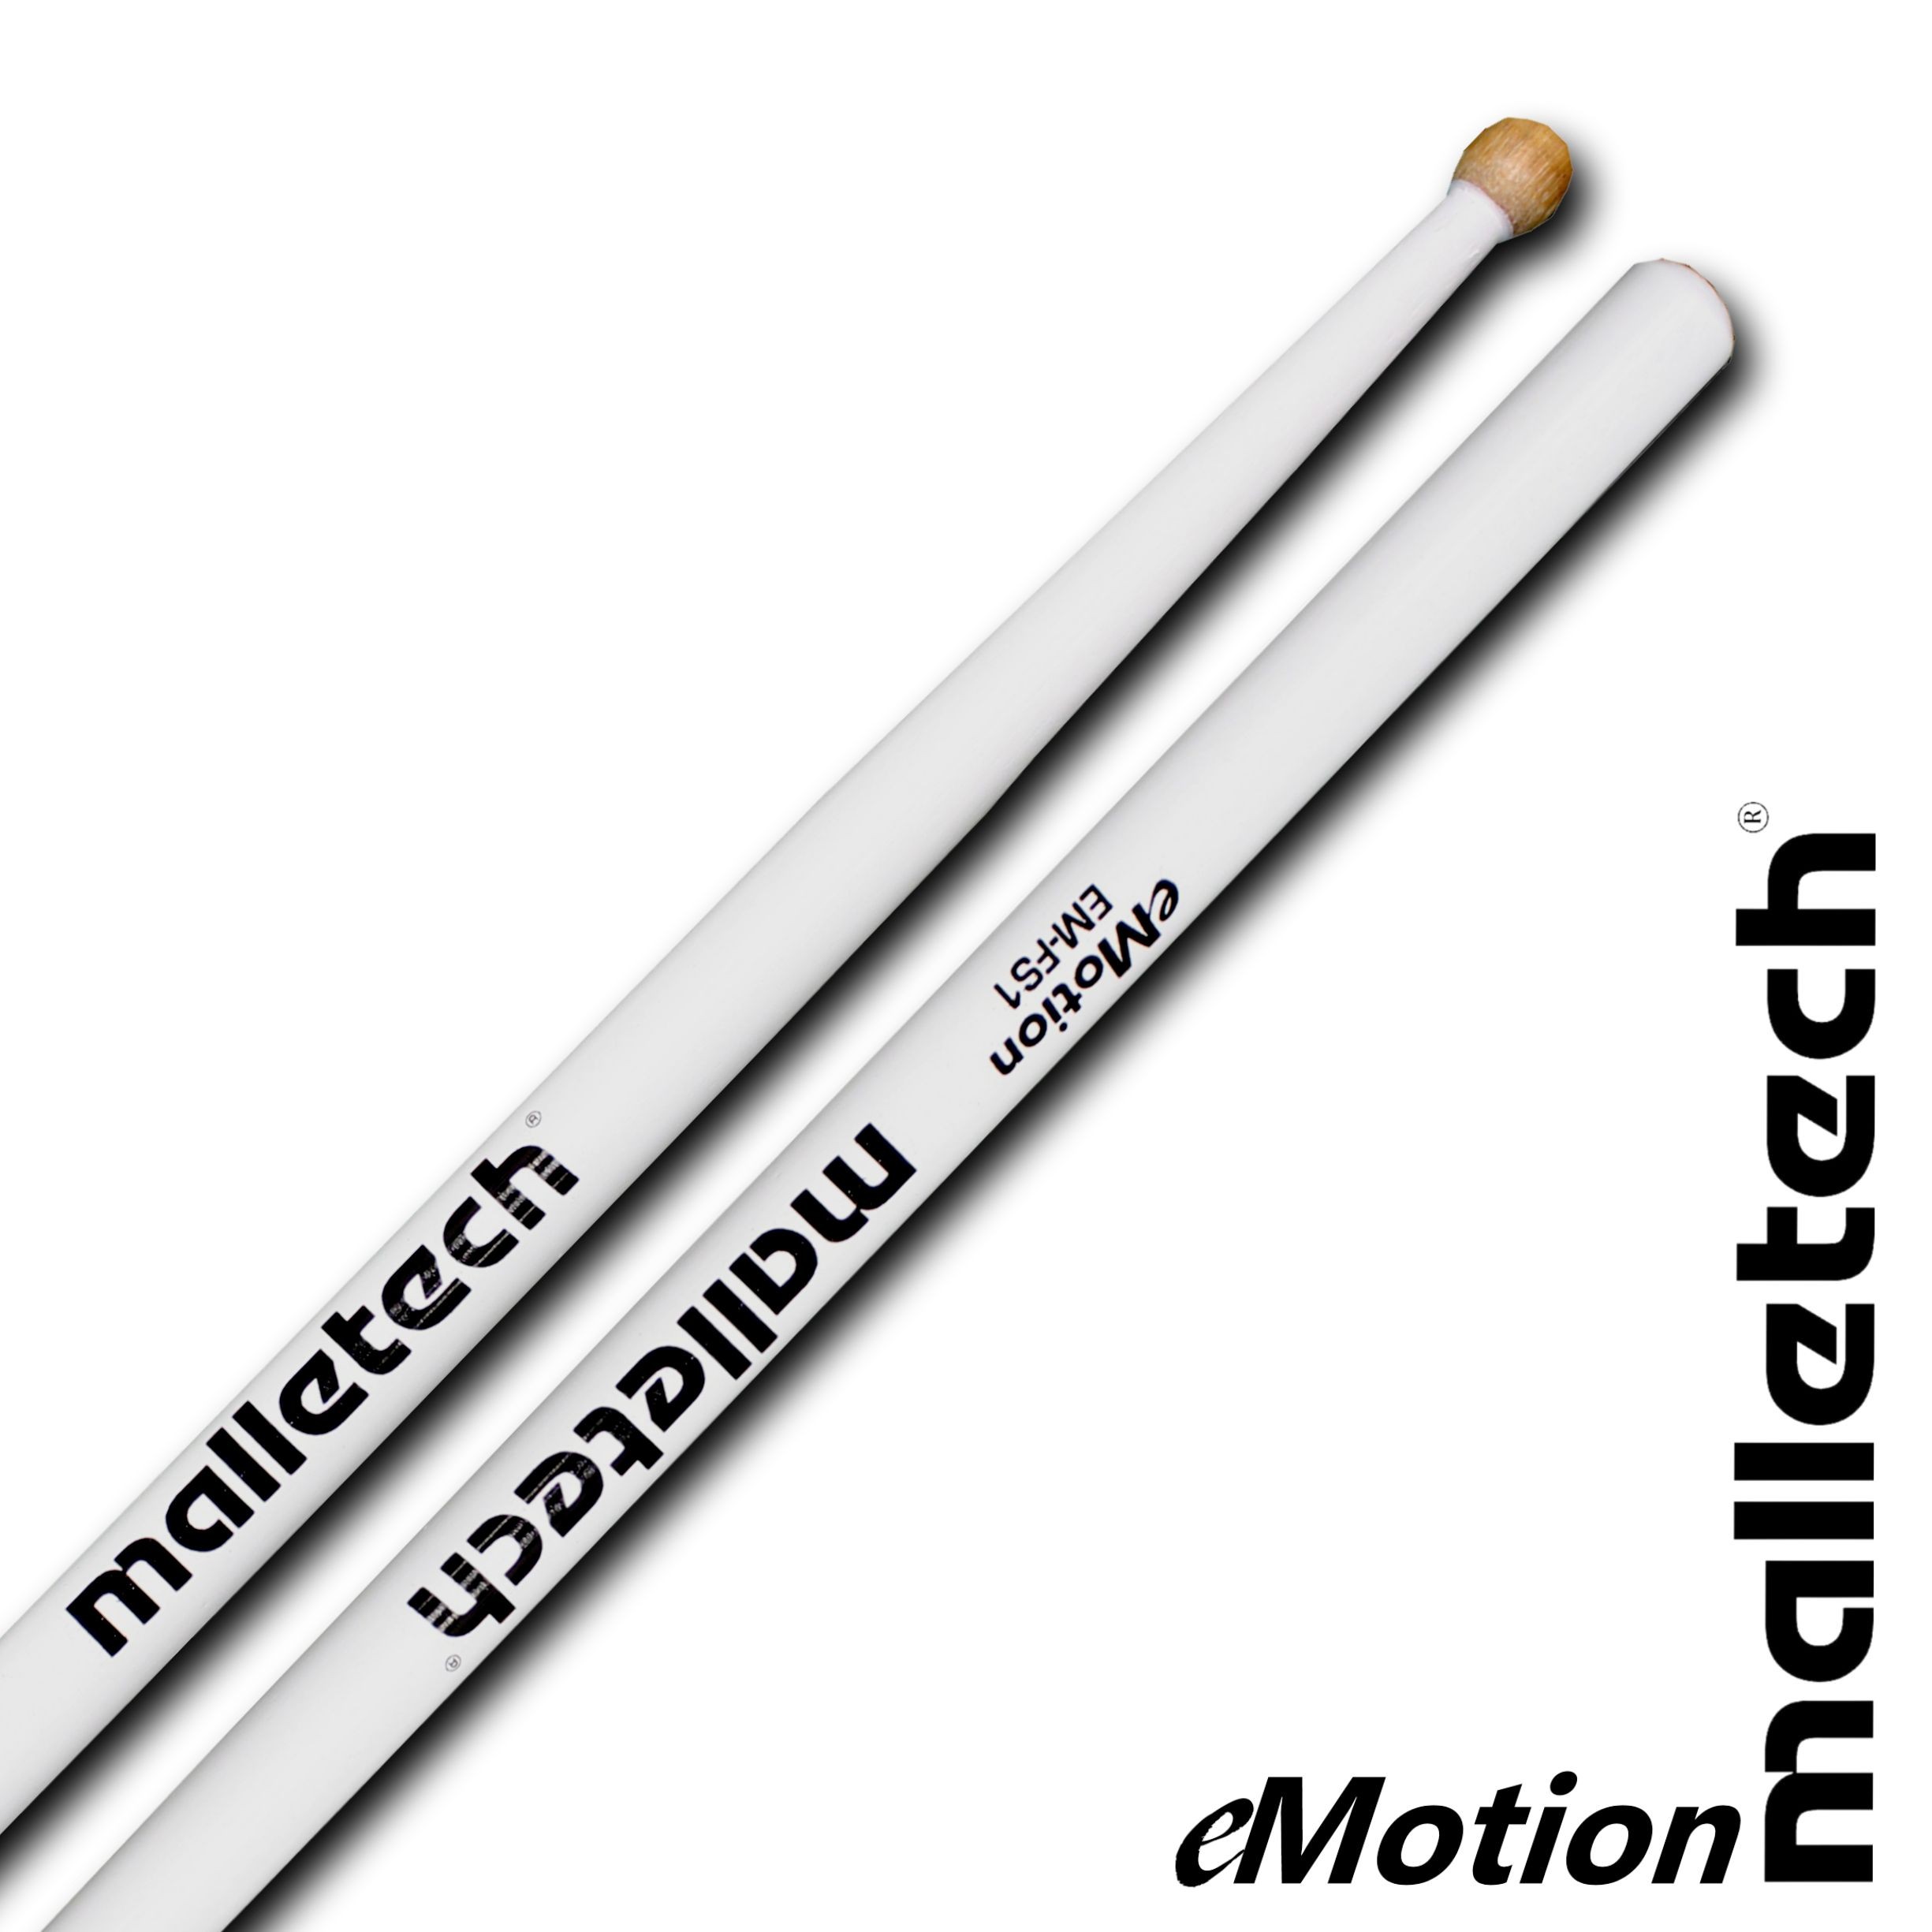 Malletech EM-FS1 eMotion Field Snare Drum Sticks